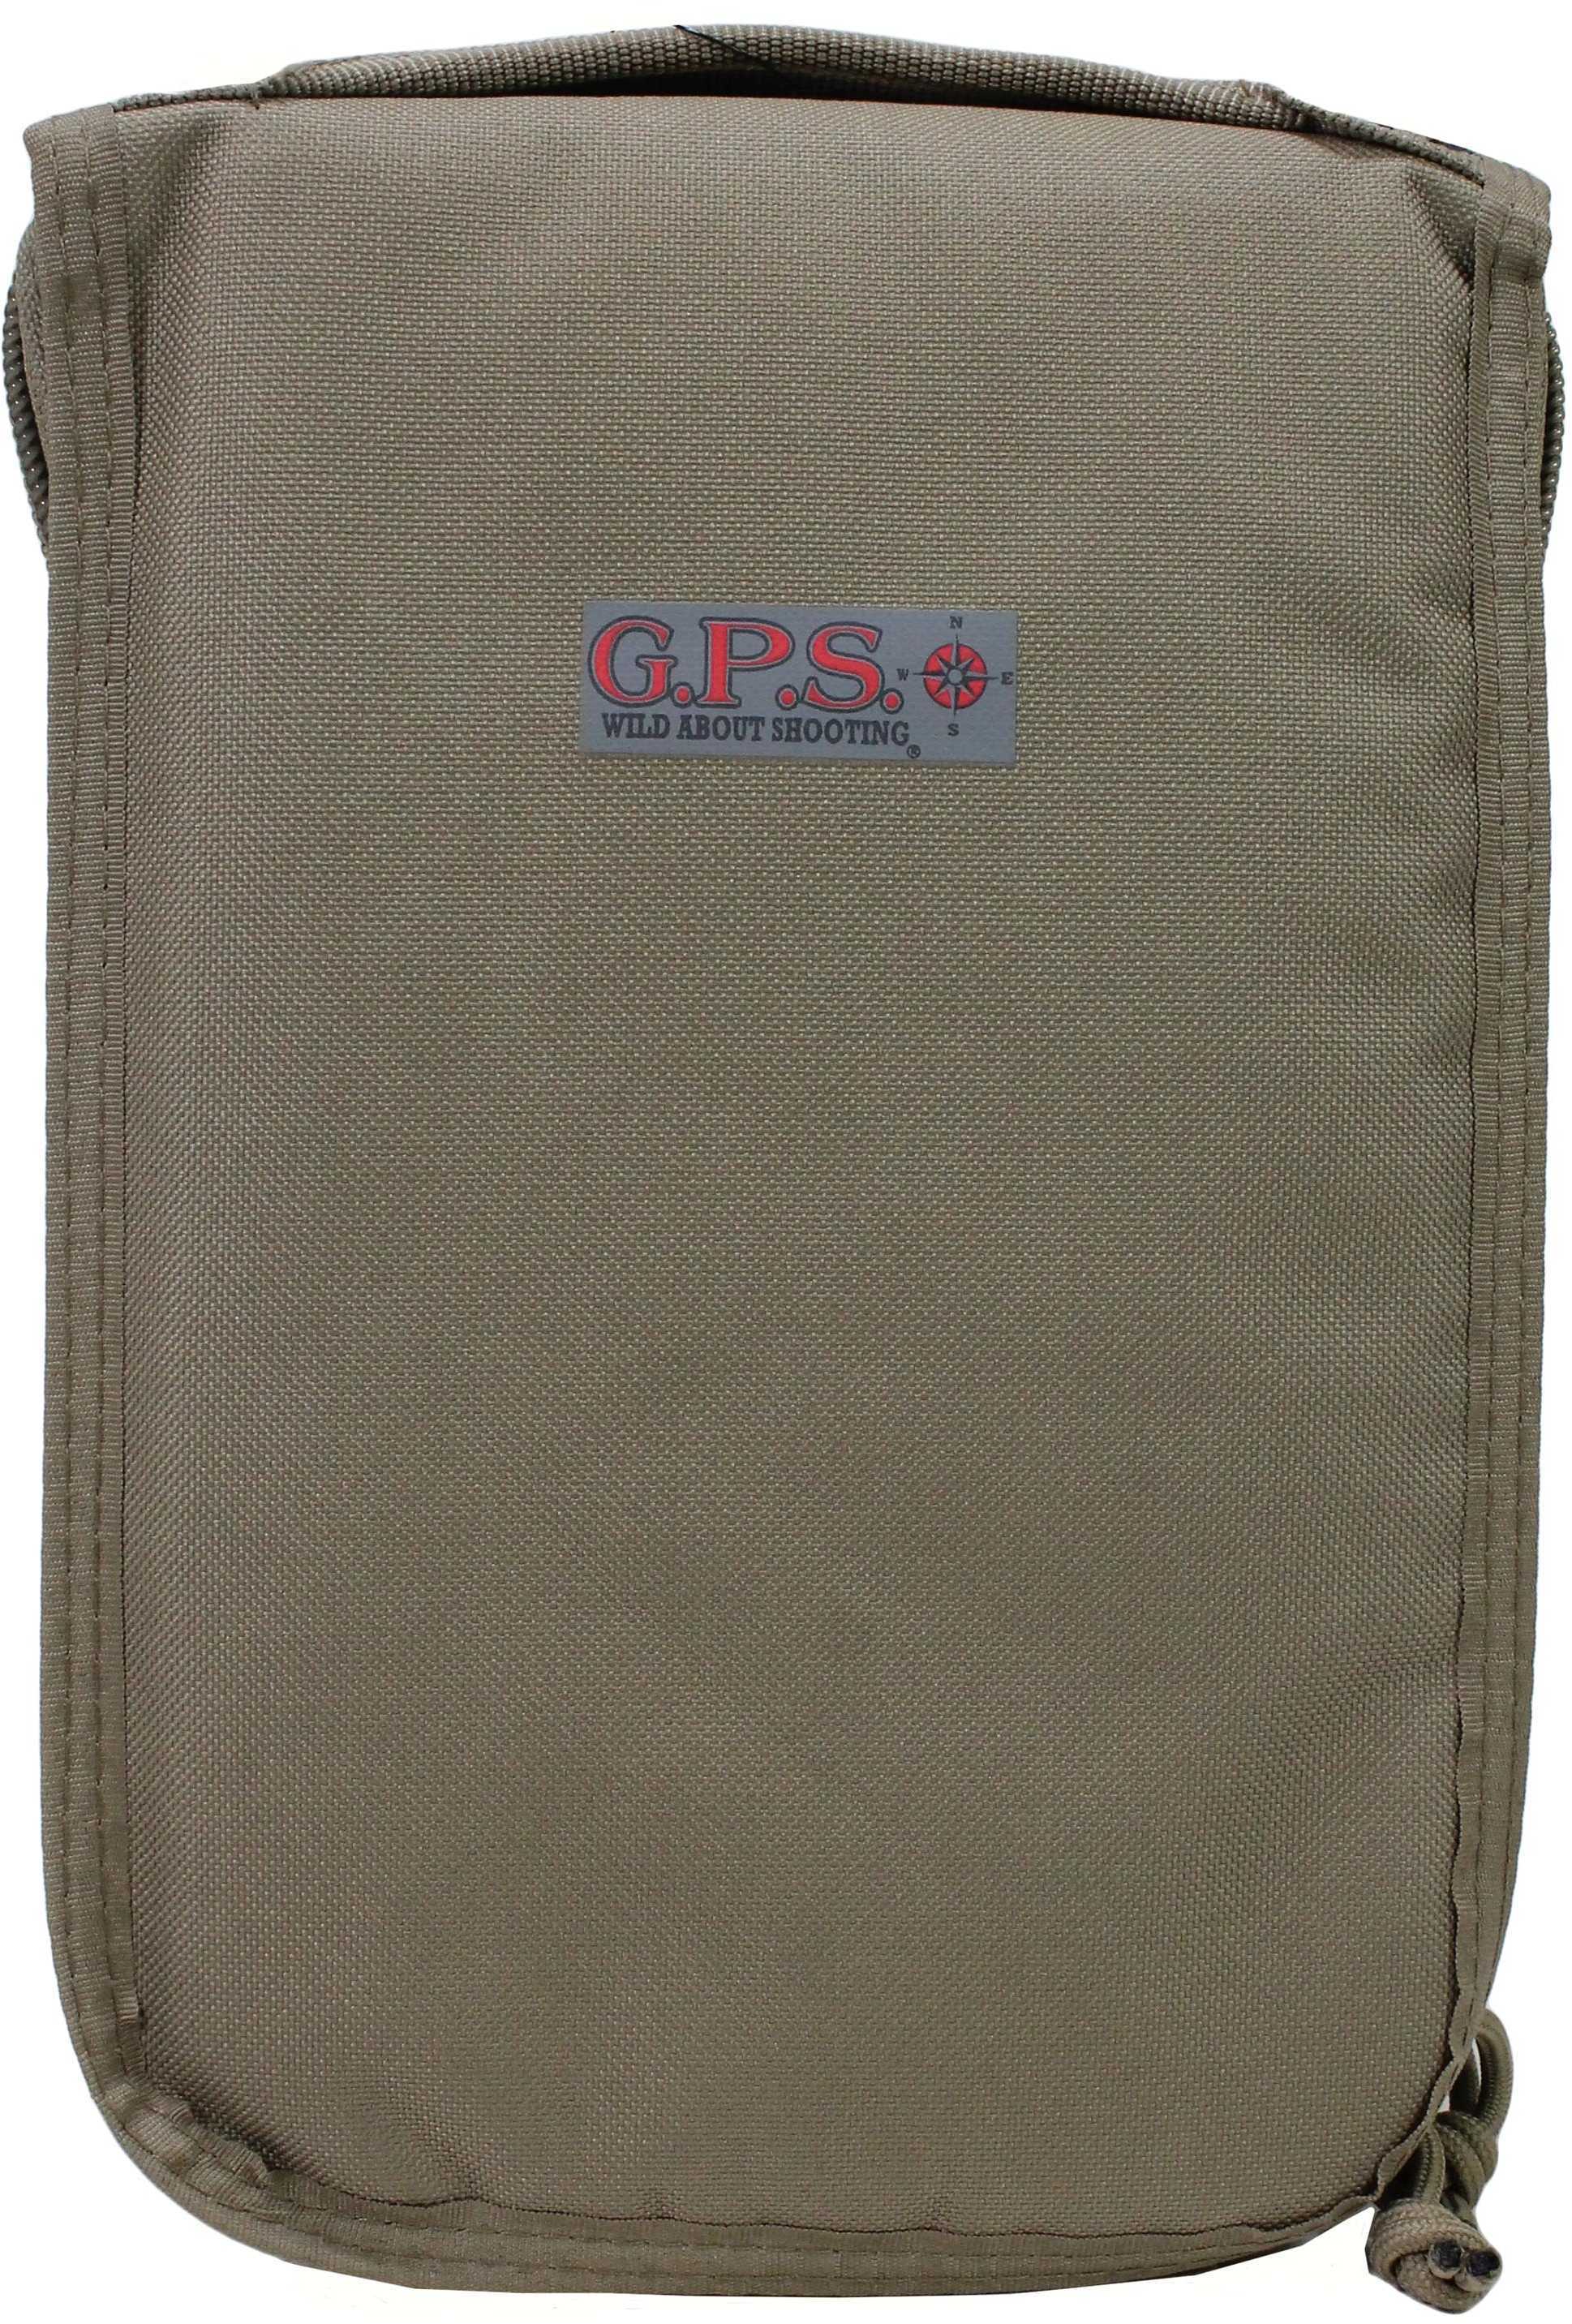 GPS Tactical Pistol Case Fits Range Backpack Tan